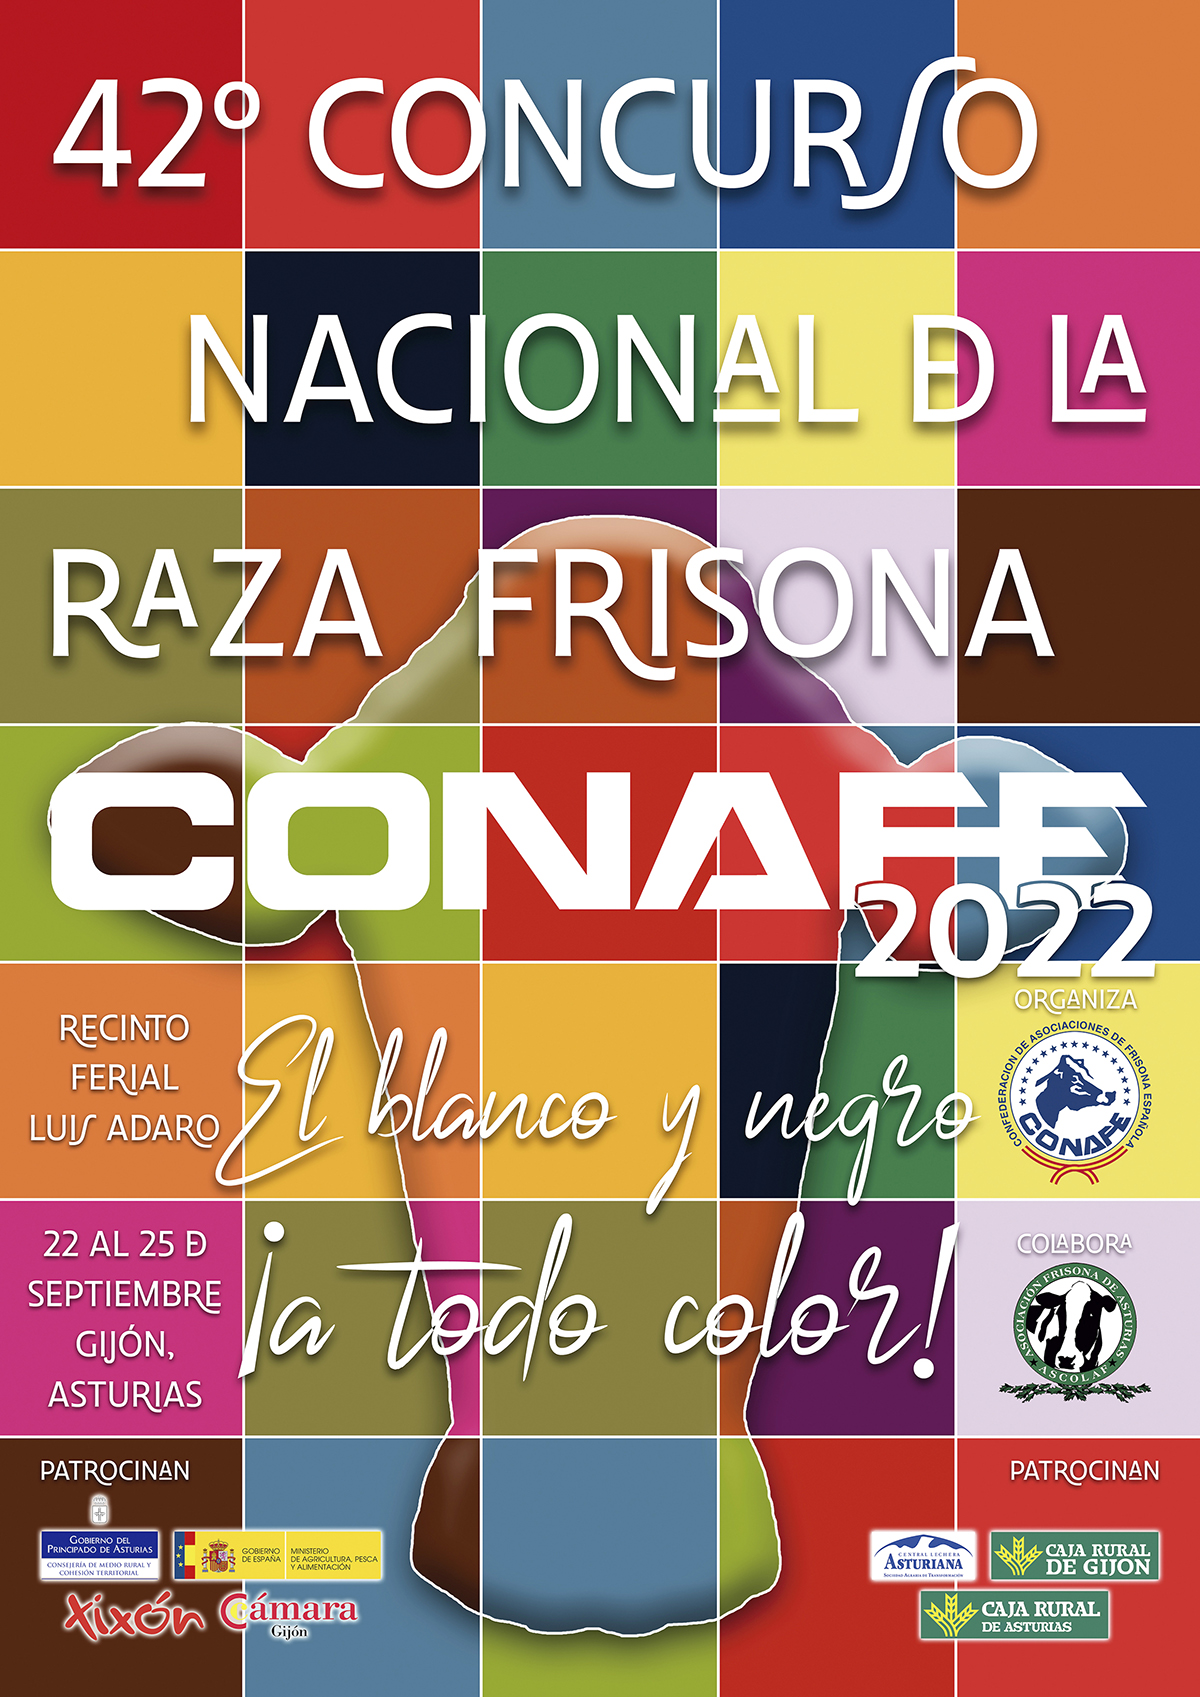 CARTEL CONCURSO NACIONAL RAZA FRISONA CONAFE 2022